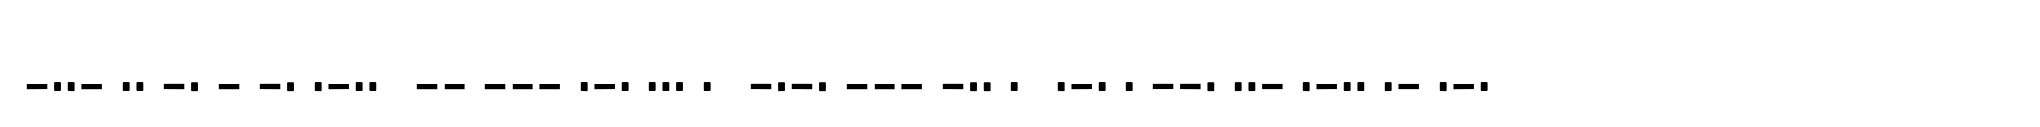 XIntnl Morse Code Regular image